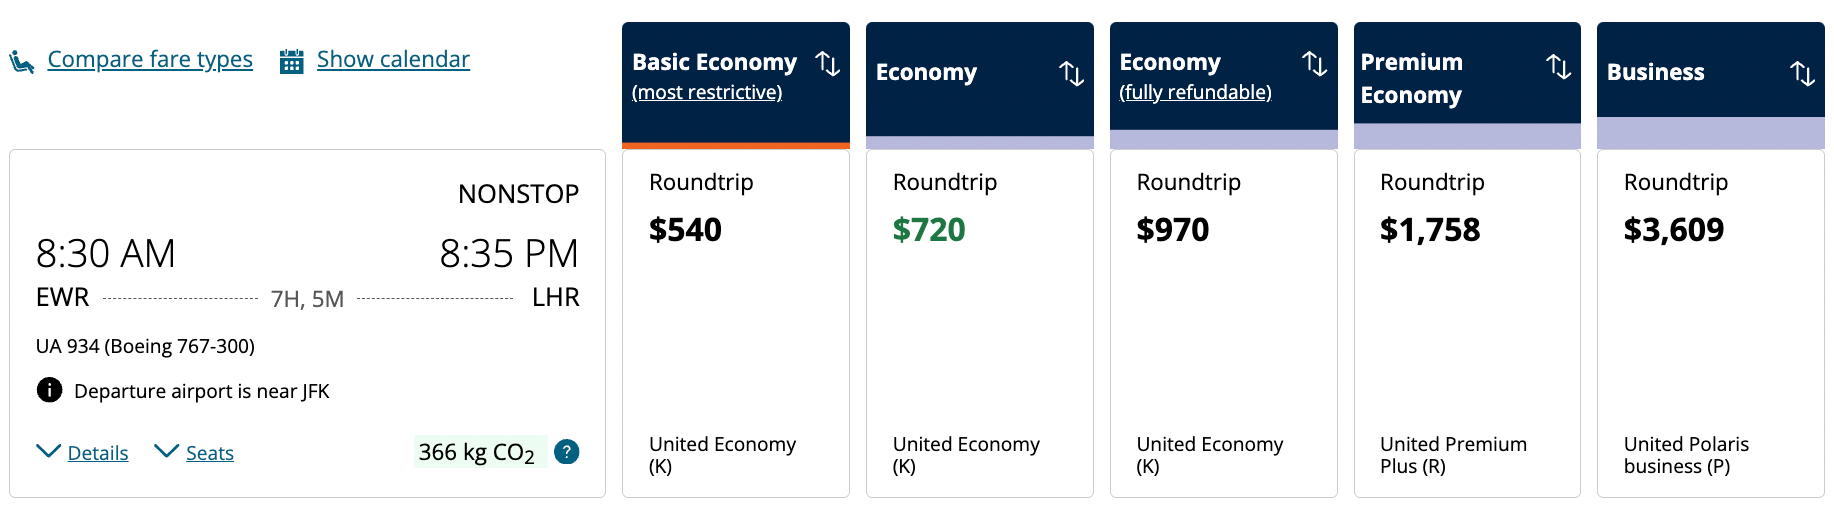 United Airlines EWR-LHR ticket price comparison